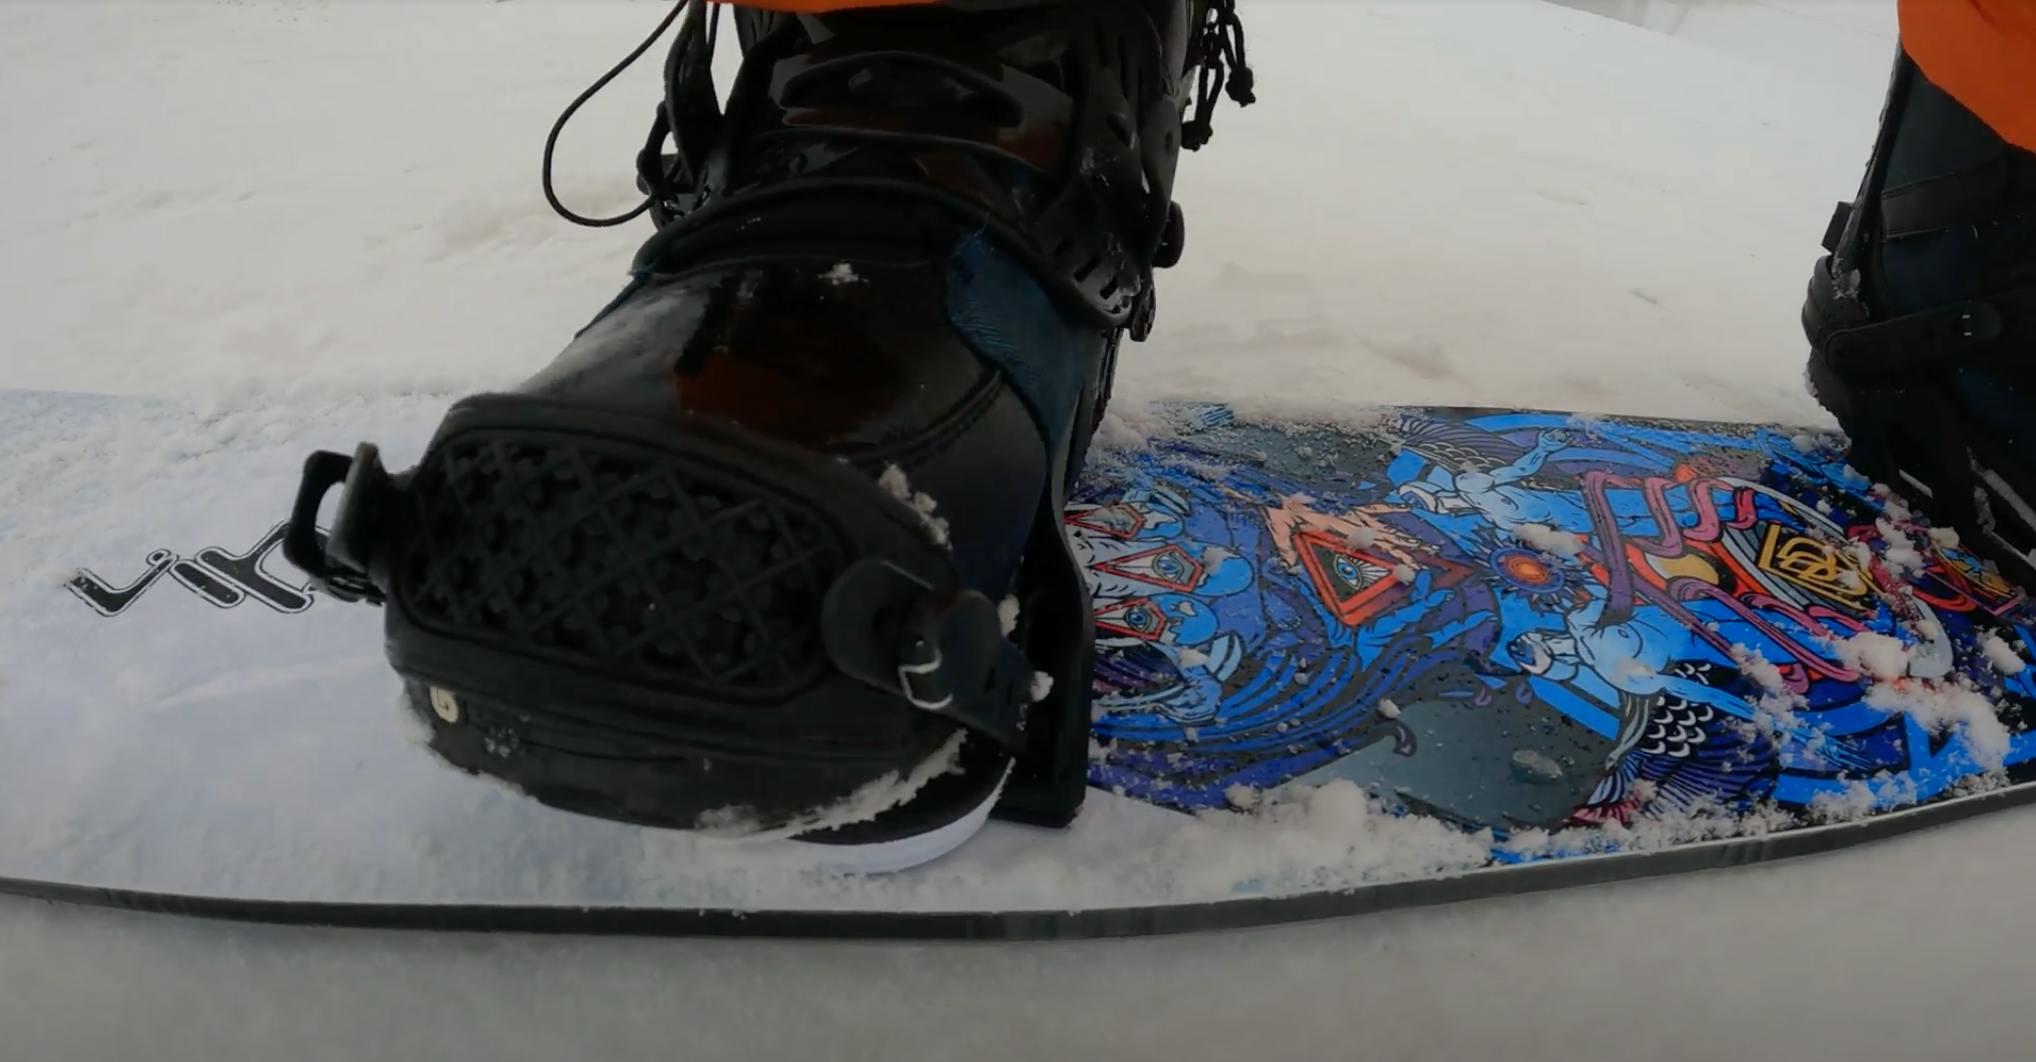 Closeup on the 2023 Lib Tech T.Rice Pro snowboard